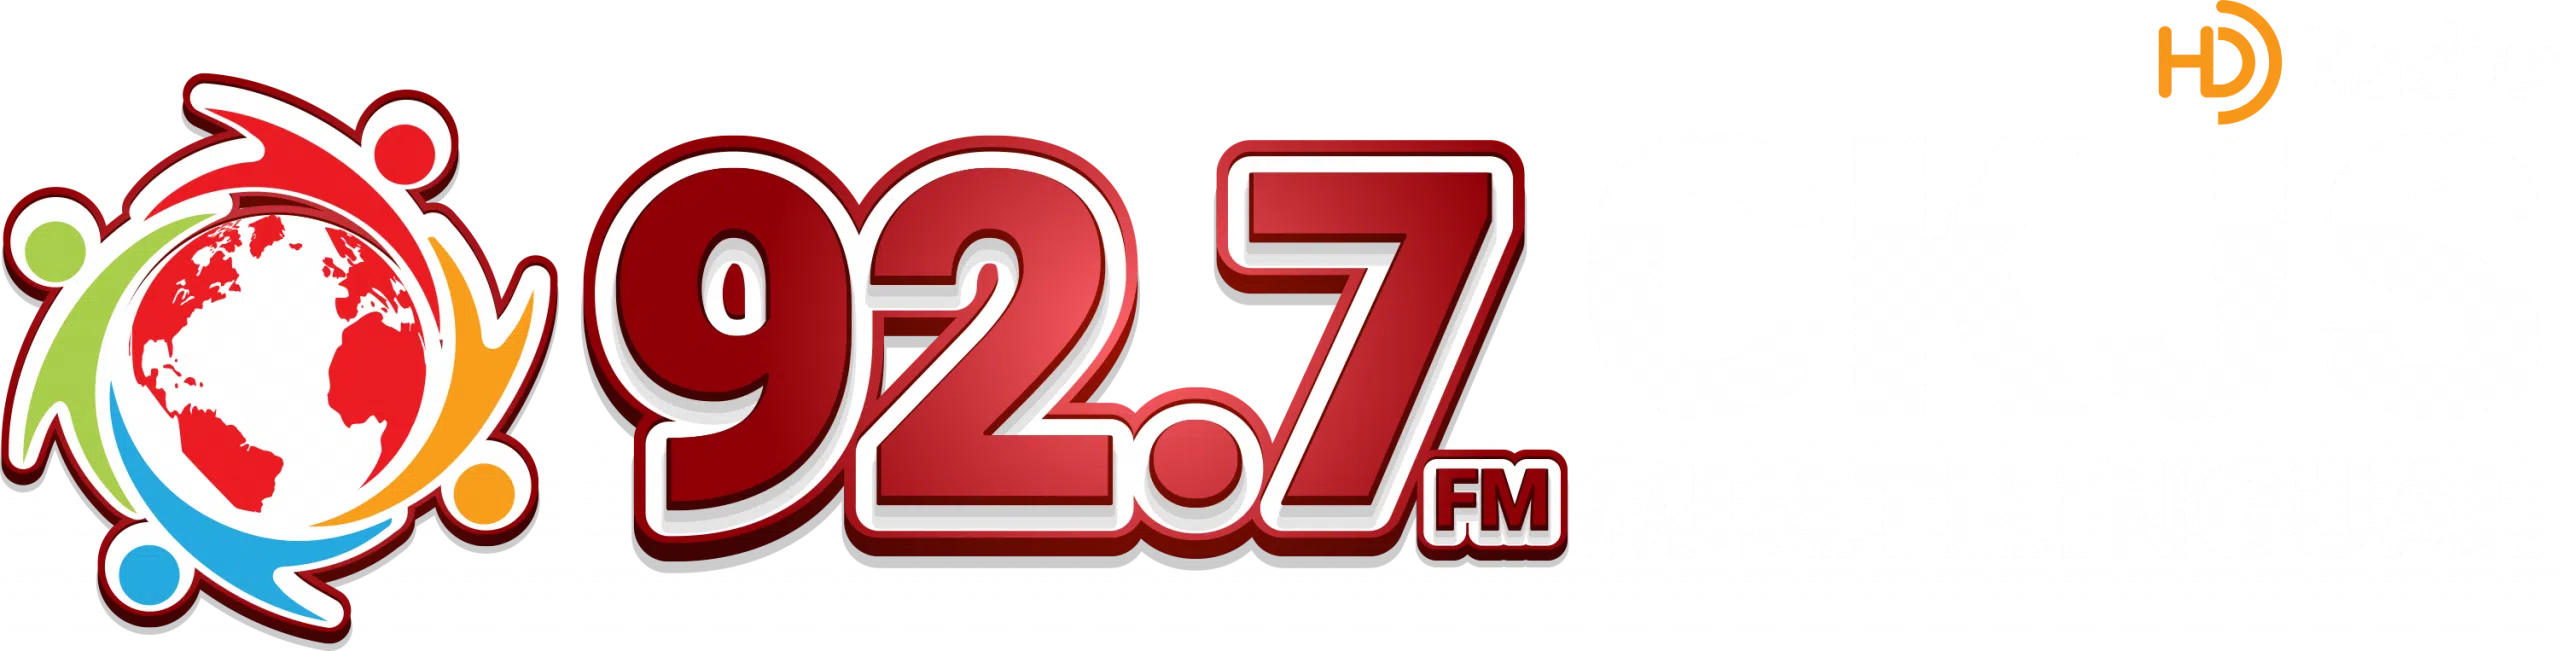 92.7 FM CKJS - Winnipeg's Multilingual Radio Station